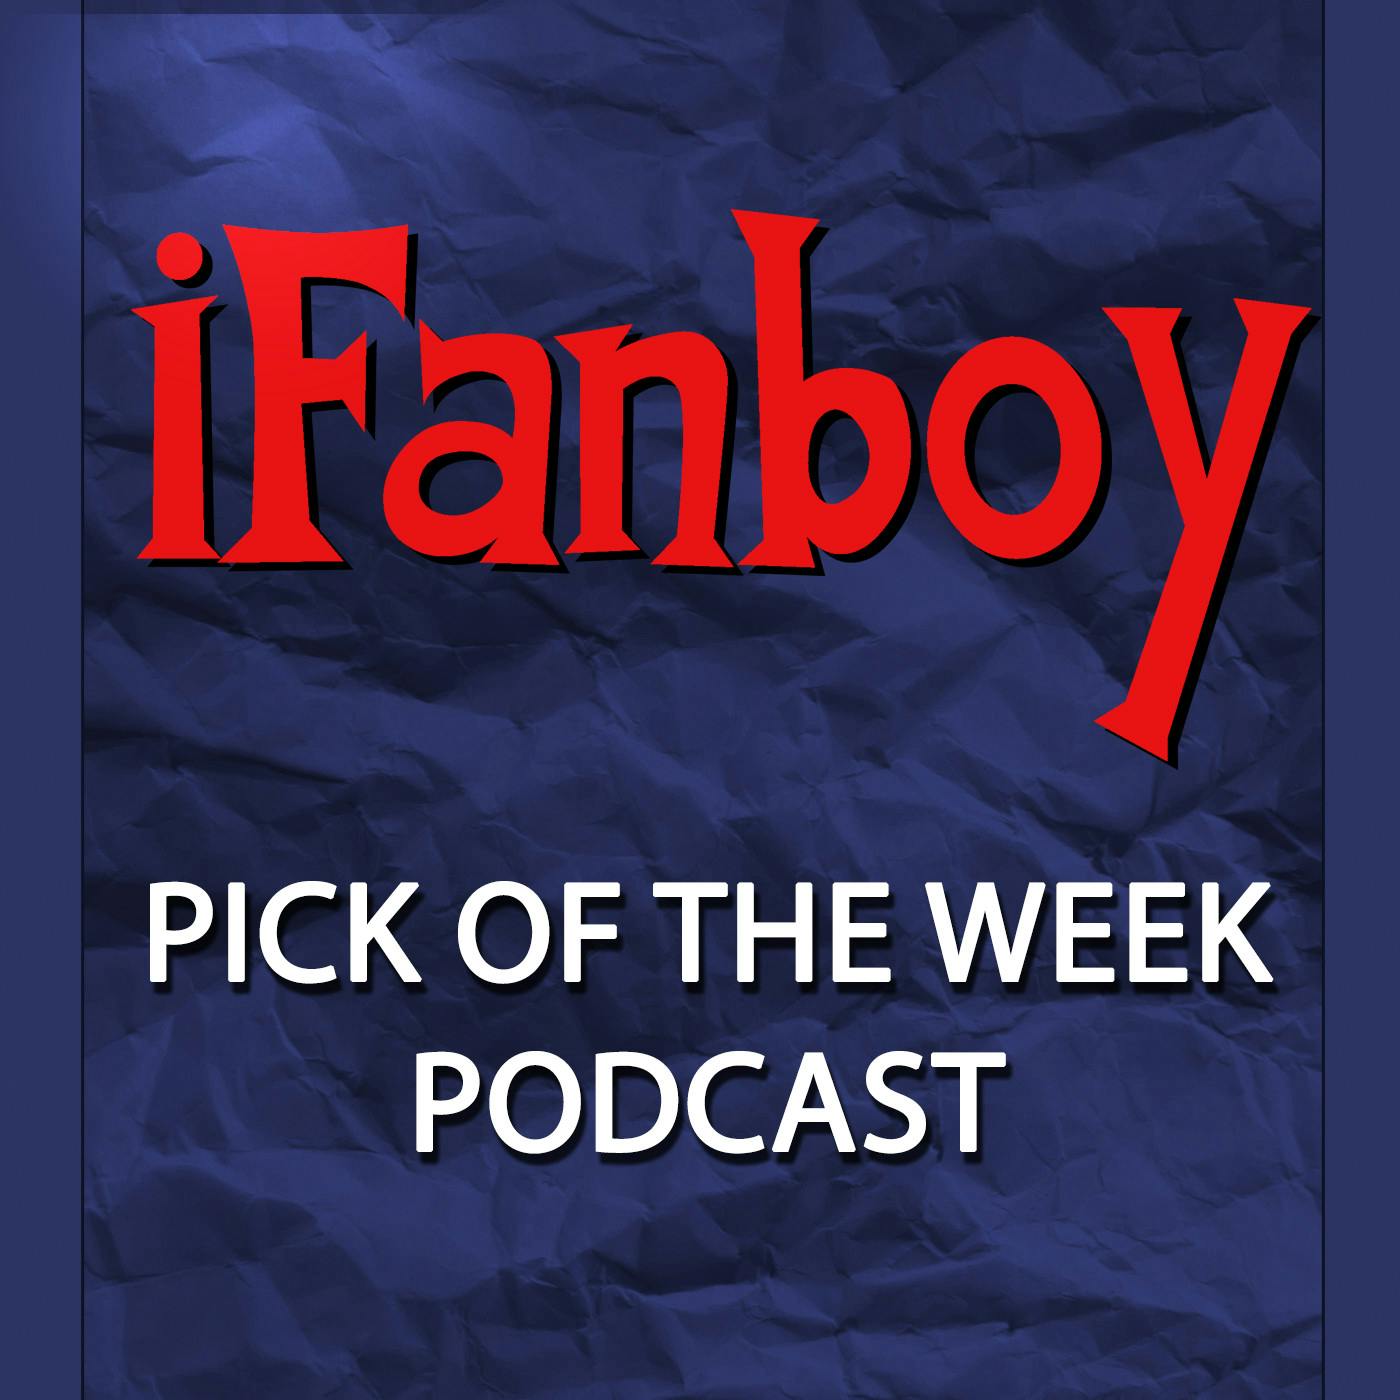 Pick of the Week #877 - Joe Fixit #5